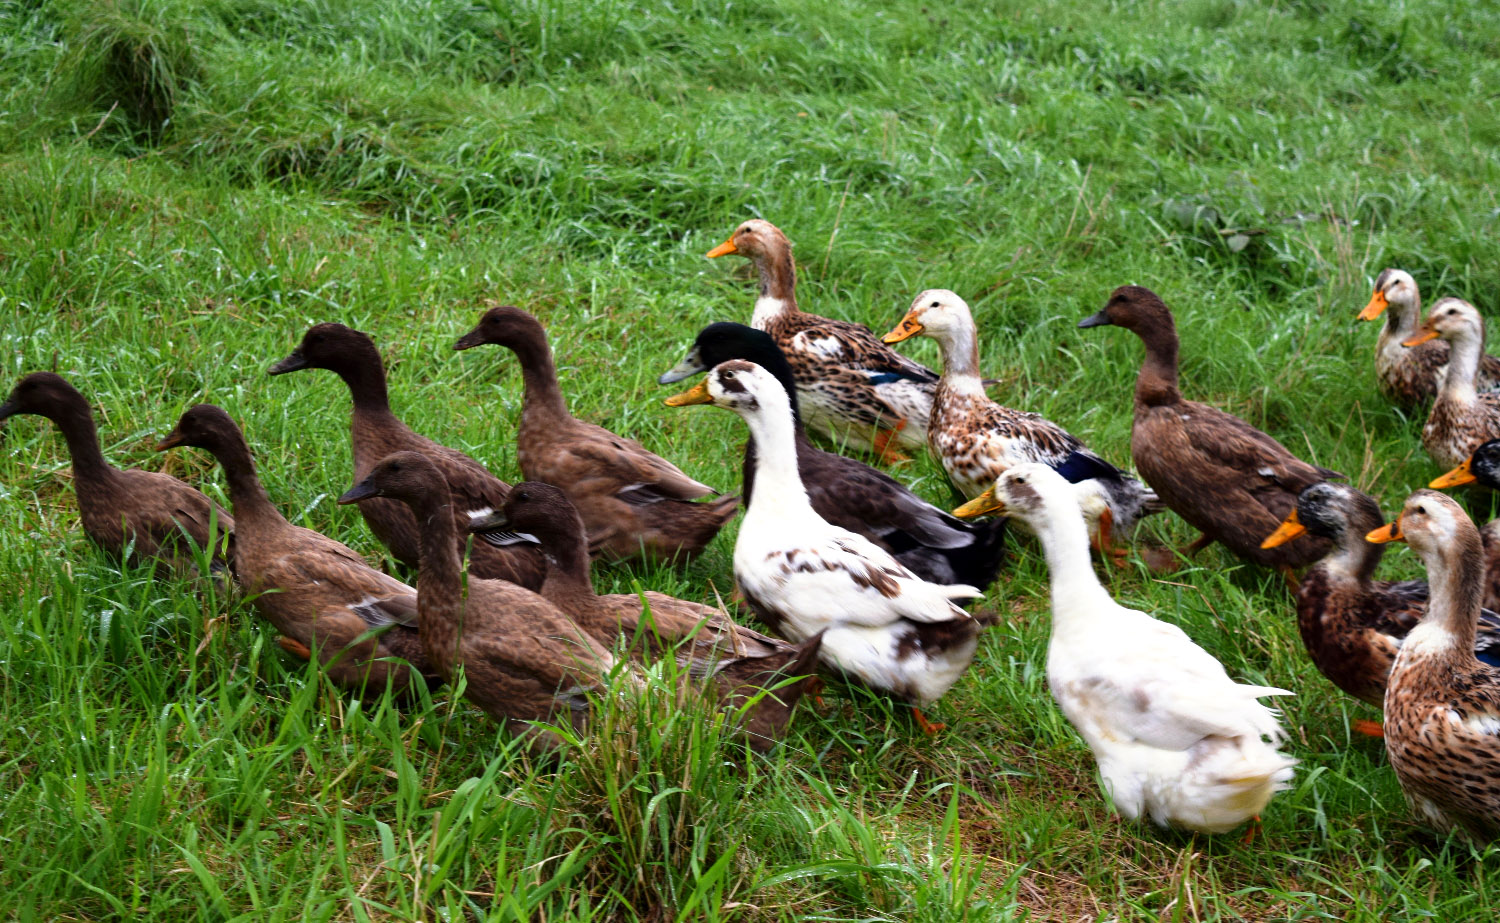 ducks on a pasture